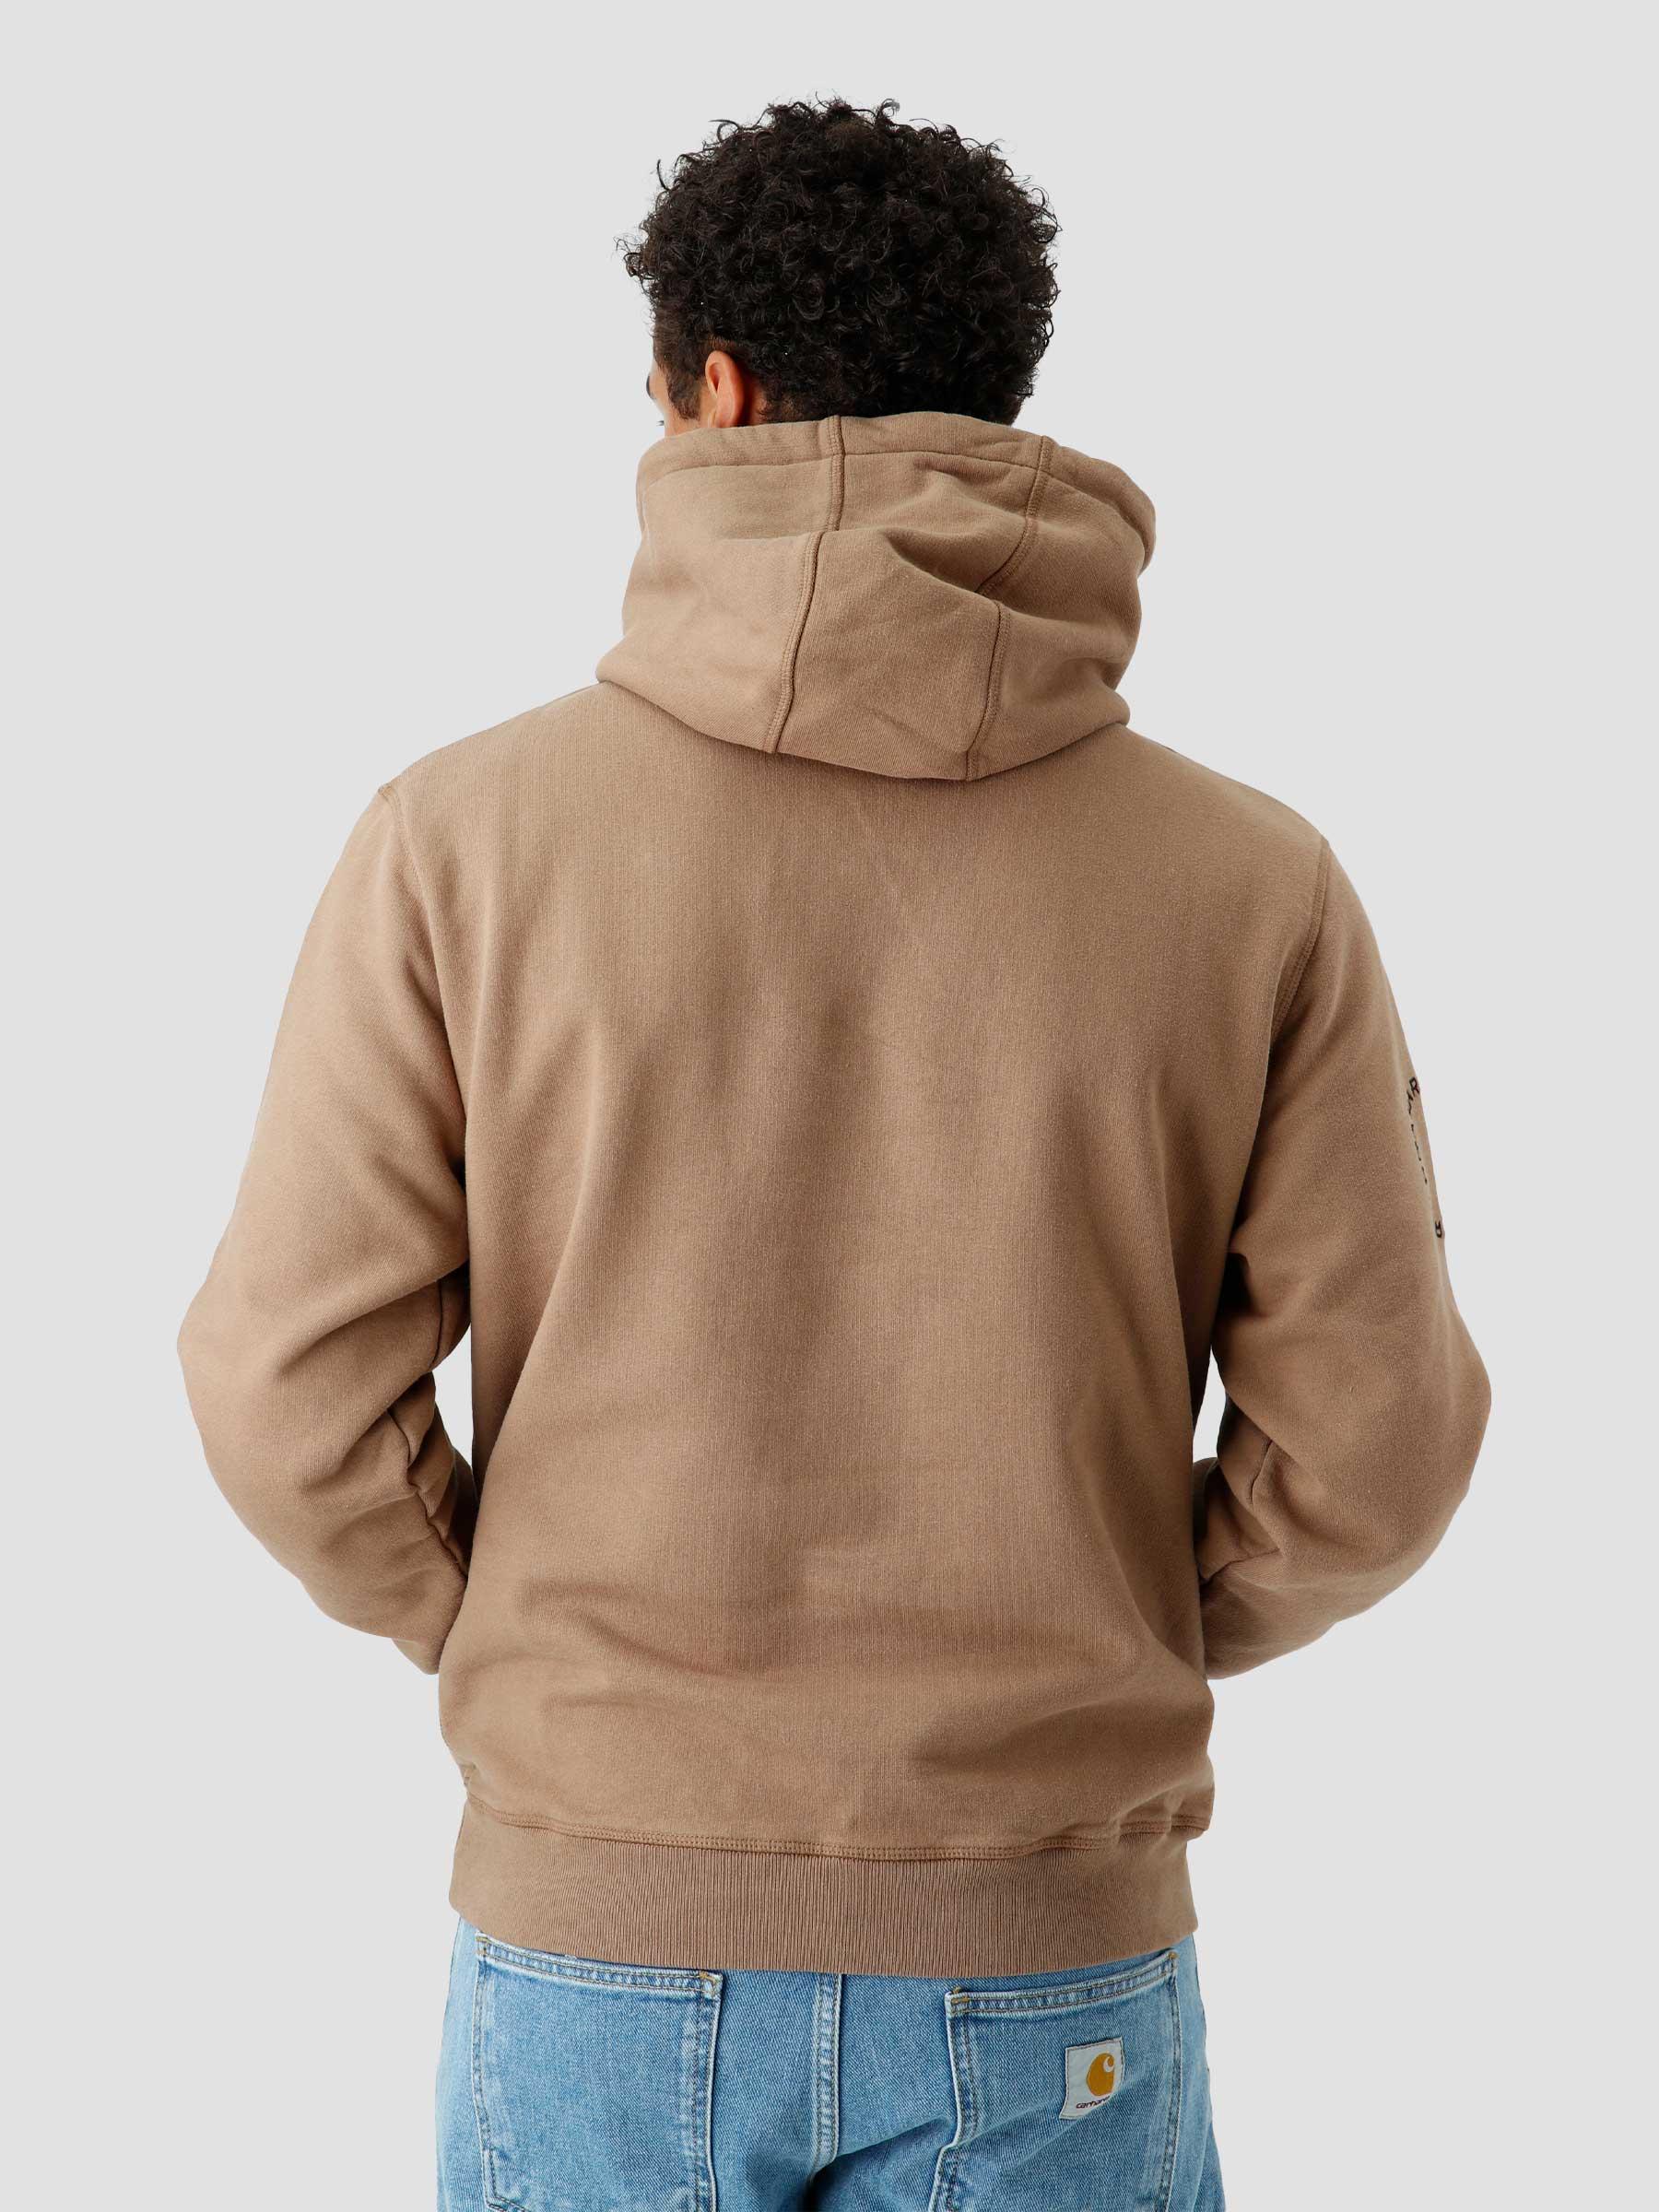 World Balance Hooded Sweatshirt Camel 48226